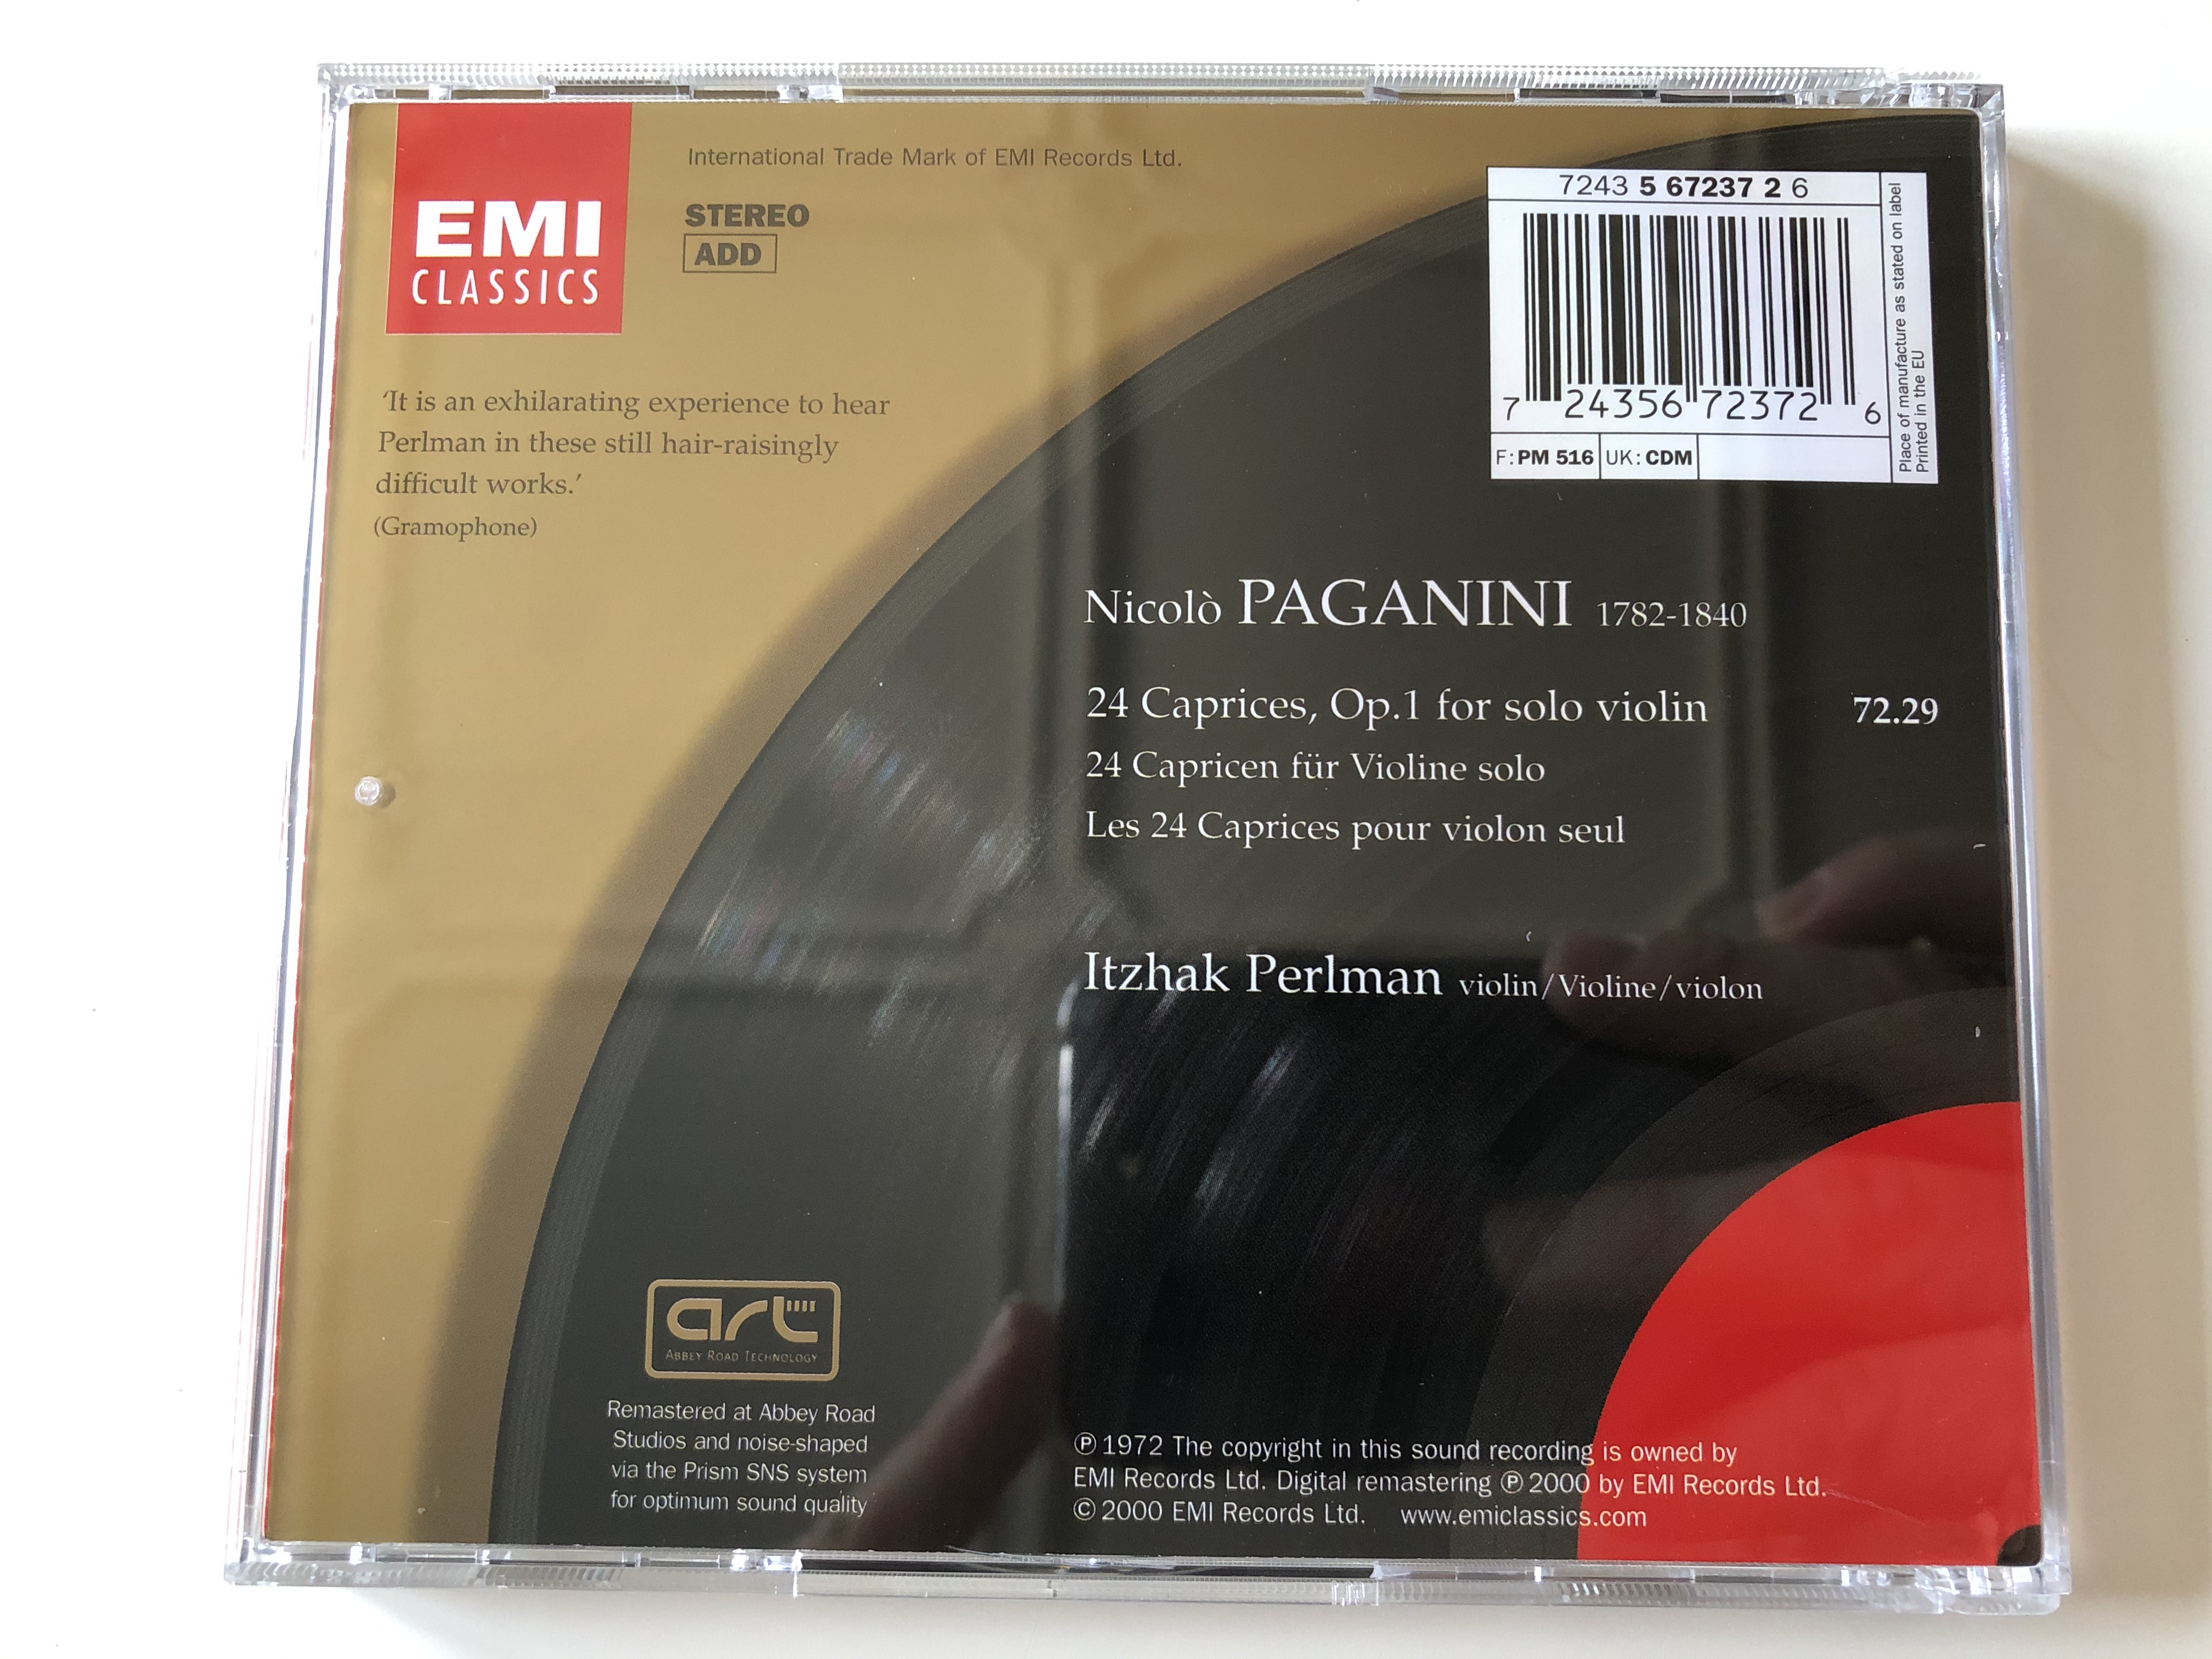 paganini-24-caprices-itzhak-perlman-great-recordings-of-the-century-emi-classics-audio-cd-2000-stereo-7243-5-67237-2-6-7-.jpg